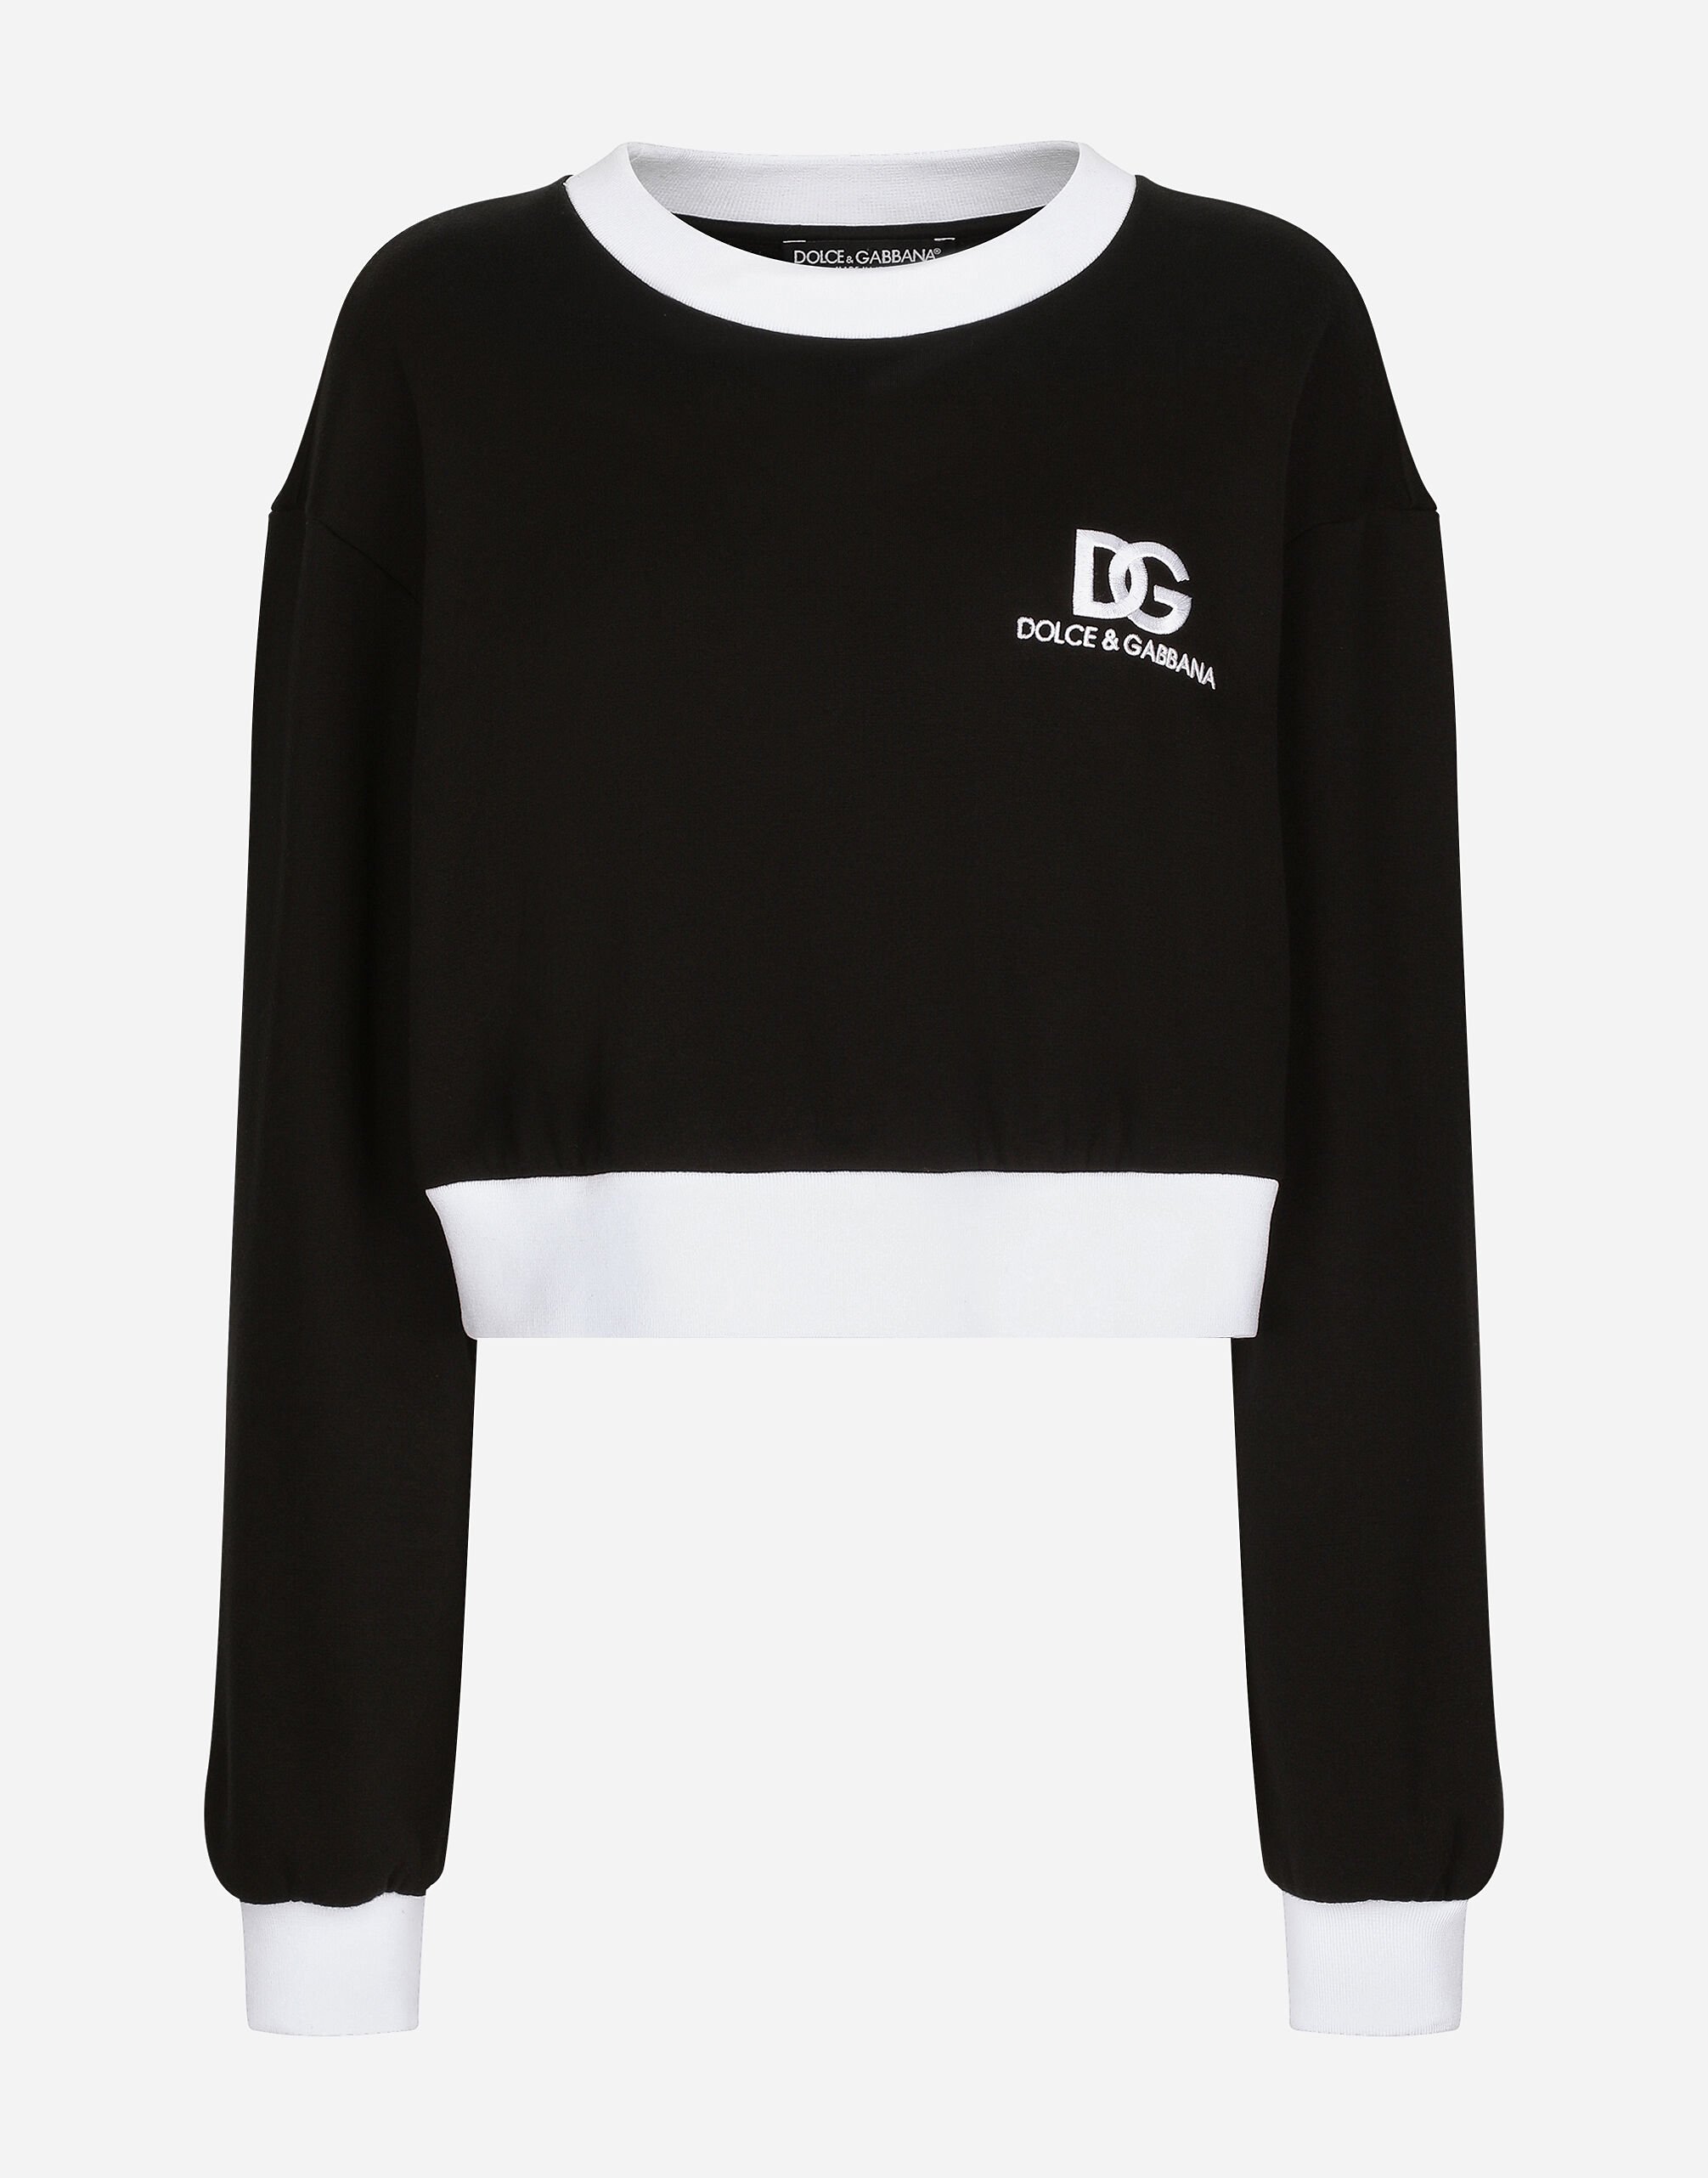 Dolce & Gabbana Sweat-shirt en jersey avec logo DG brodé Blanc F8V06TGDCK6